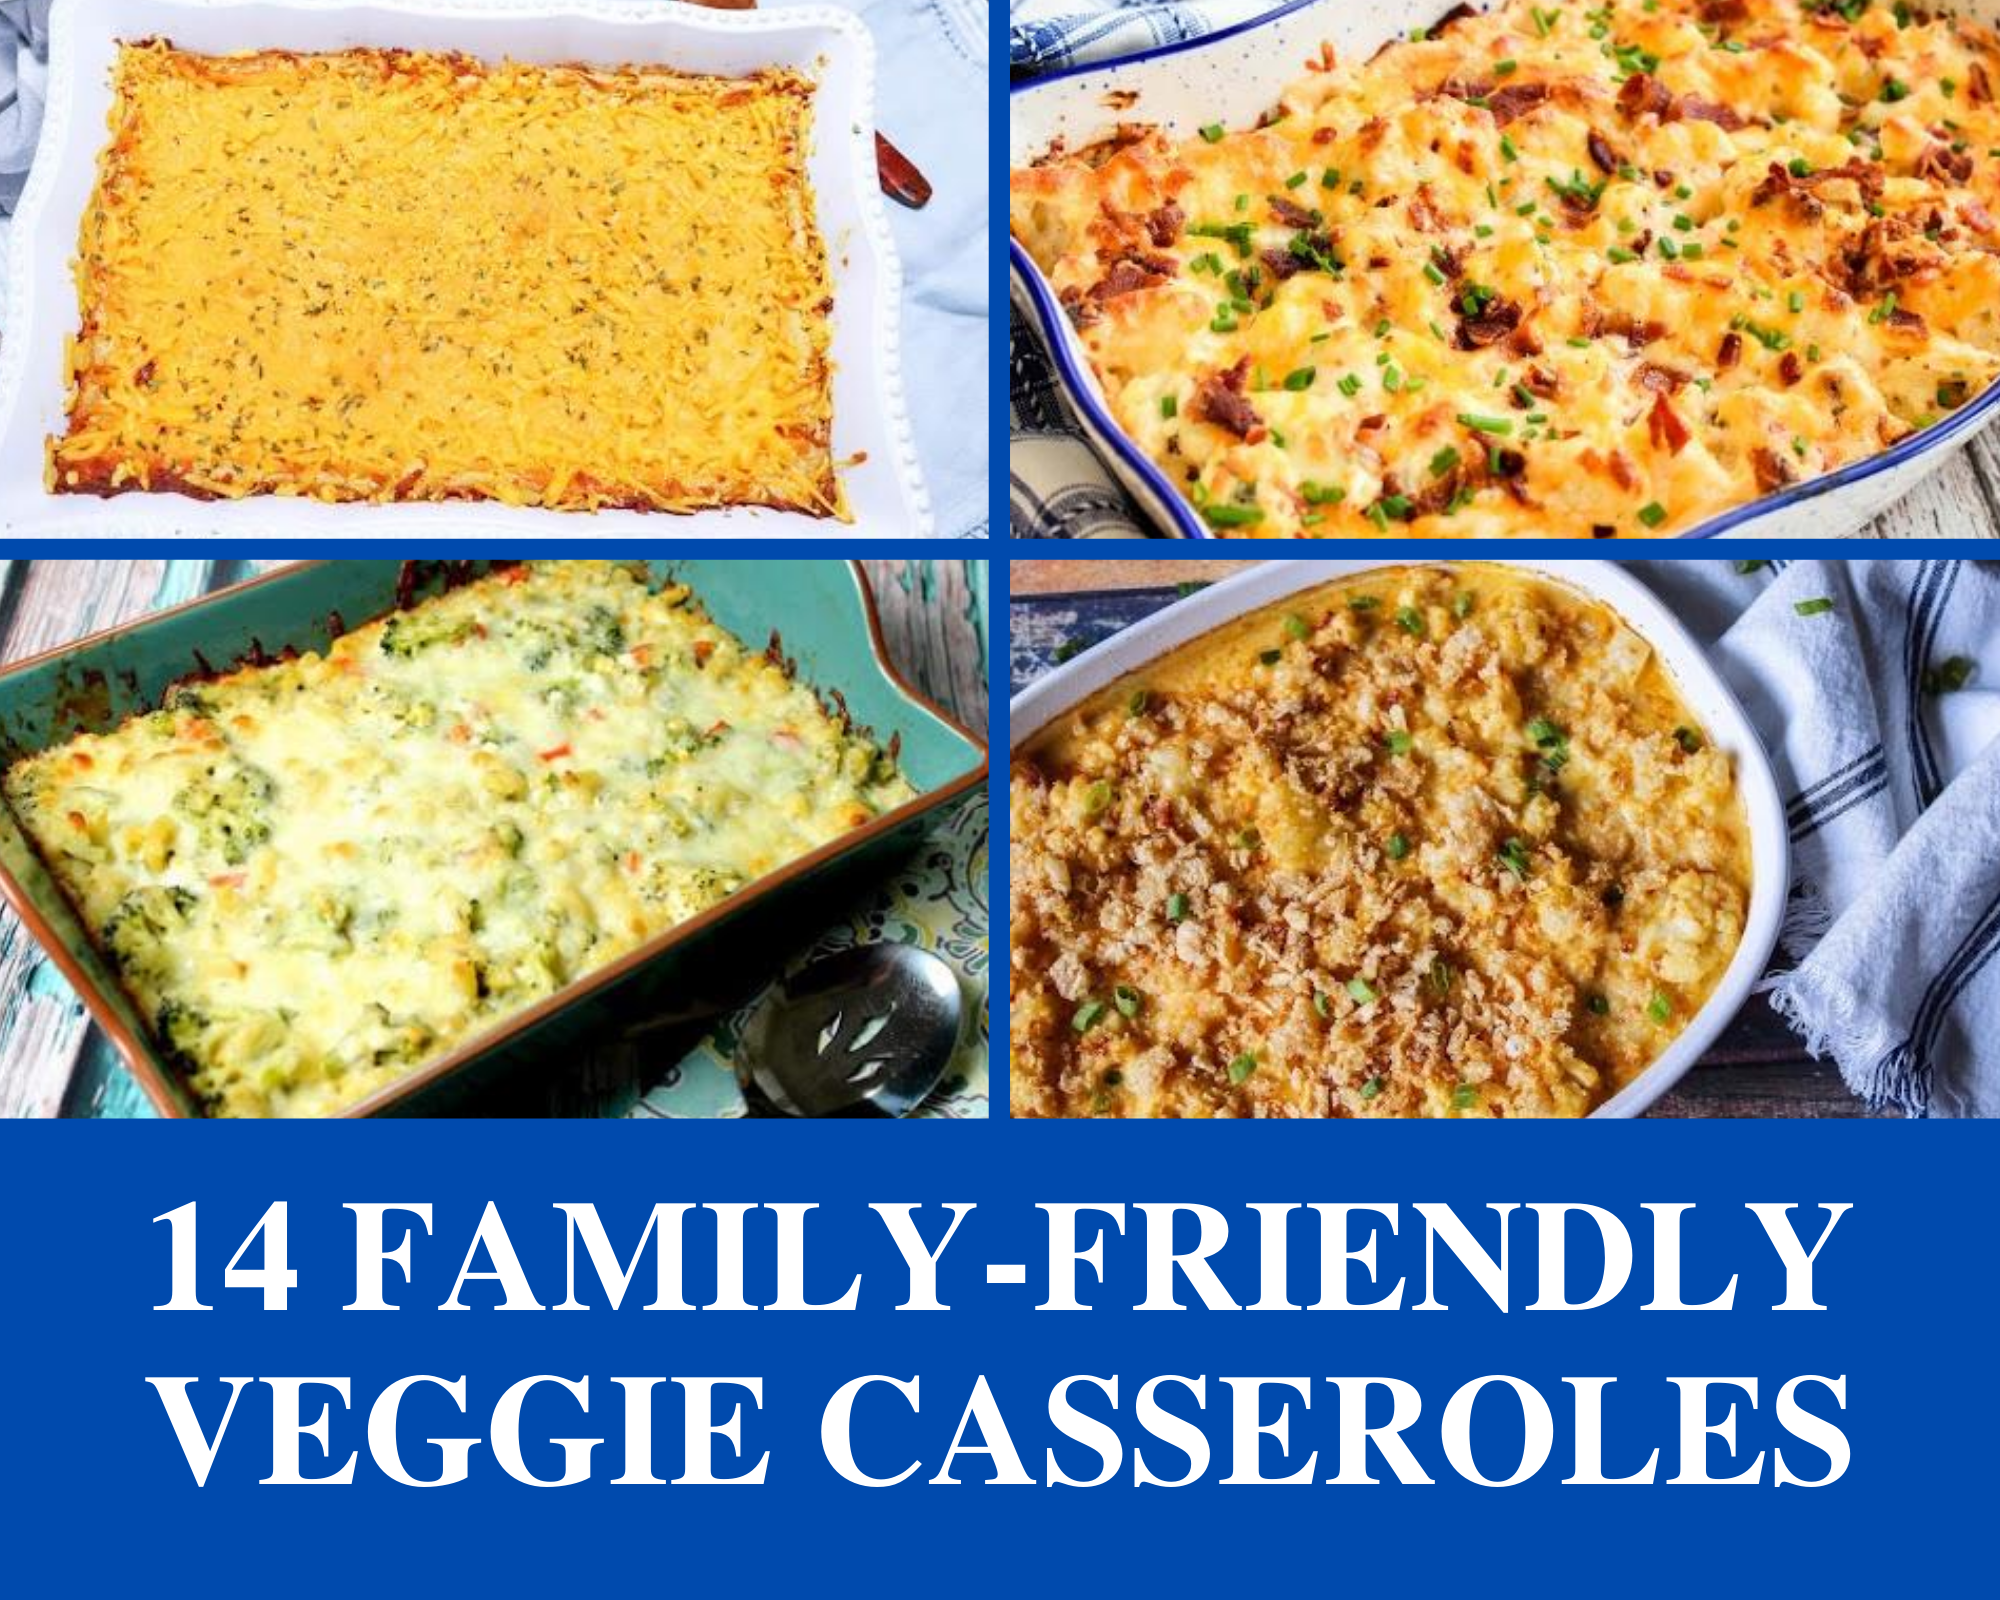 Corn casserole, cauliflower casserole and broccoli mac and cheese